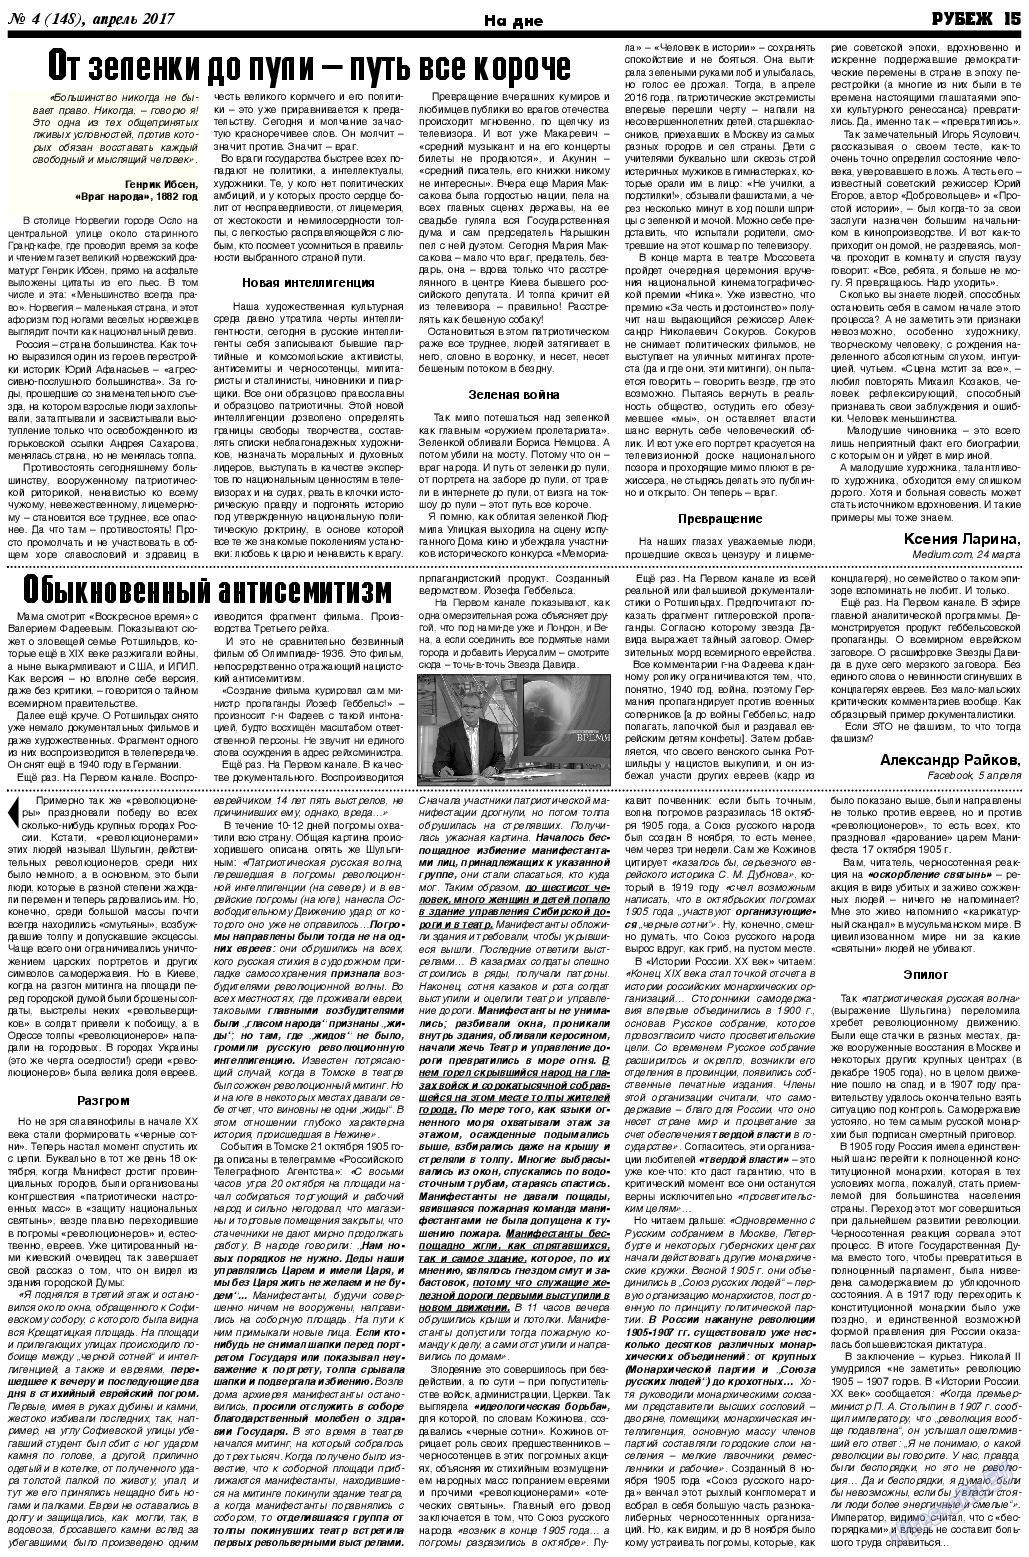 Рубеж, газета. 2017 №4 стр.15